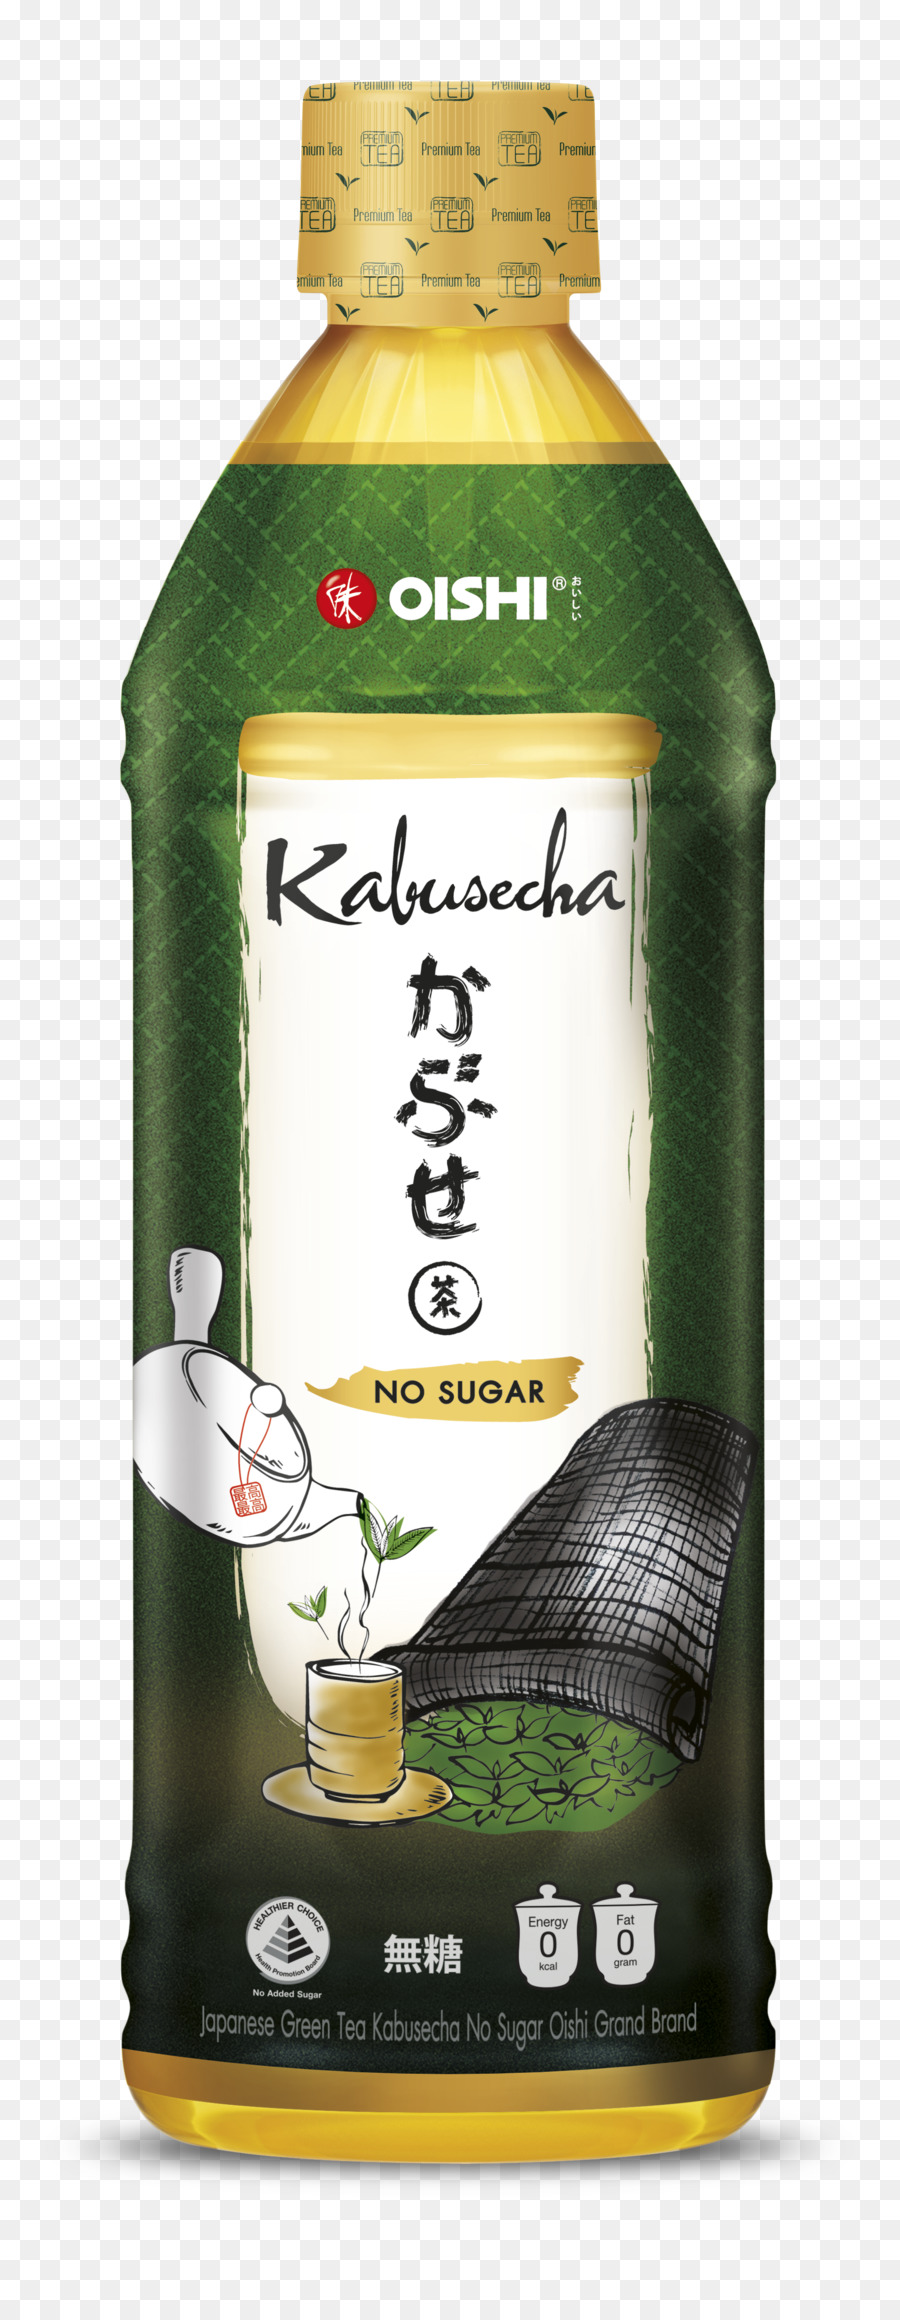 Kabusecha Grüner Tee Oishi Group Zucker - grüner Tee